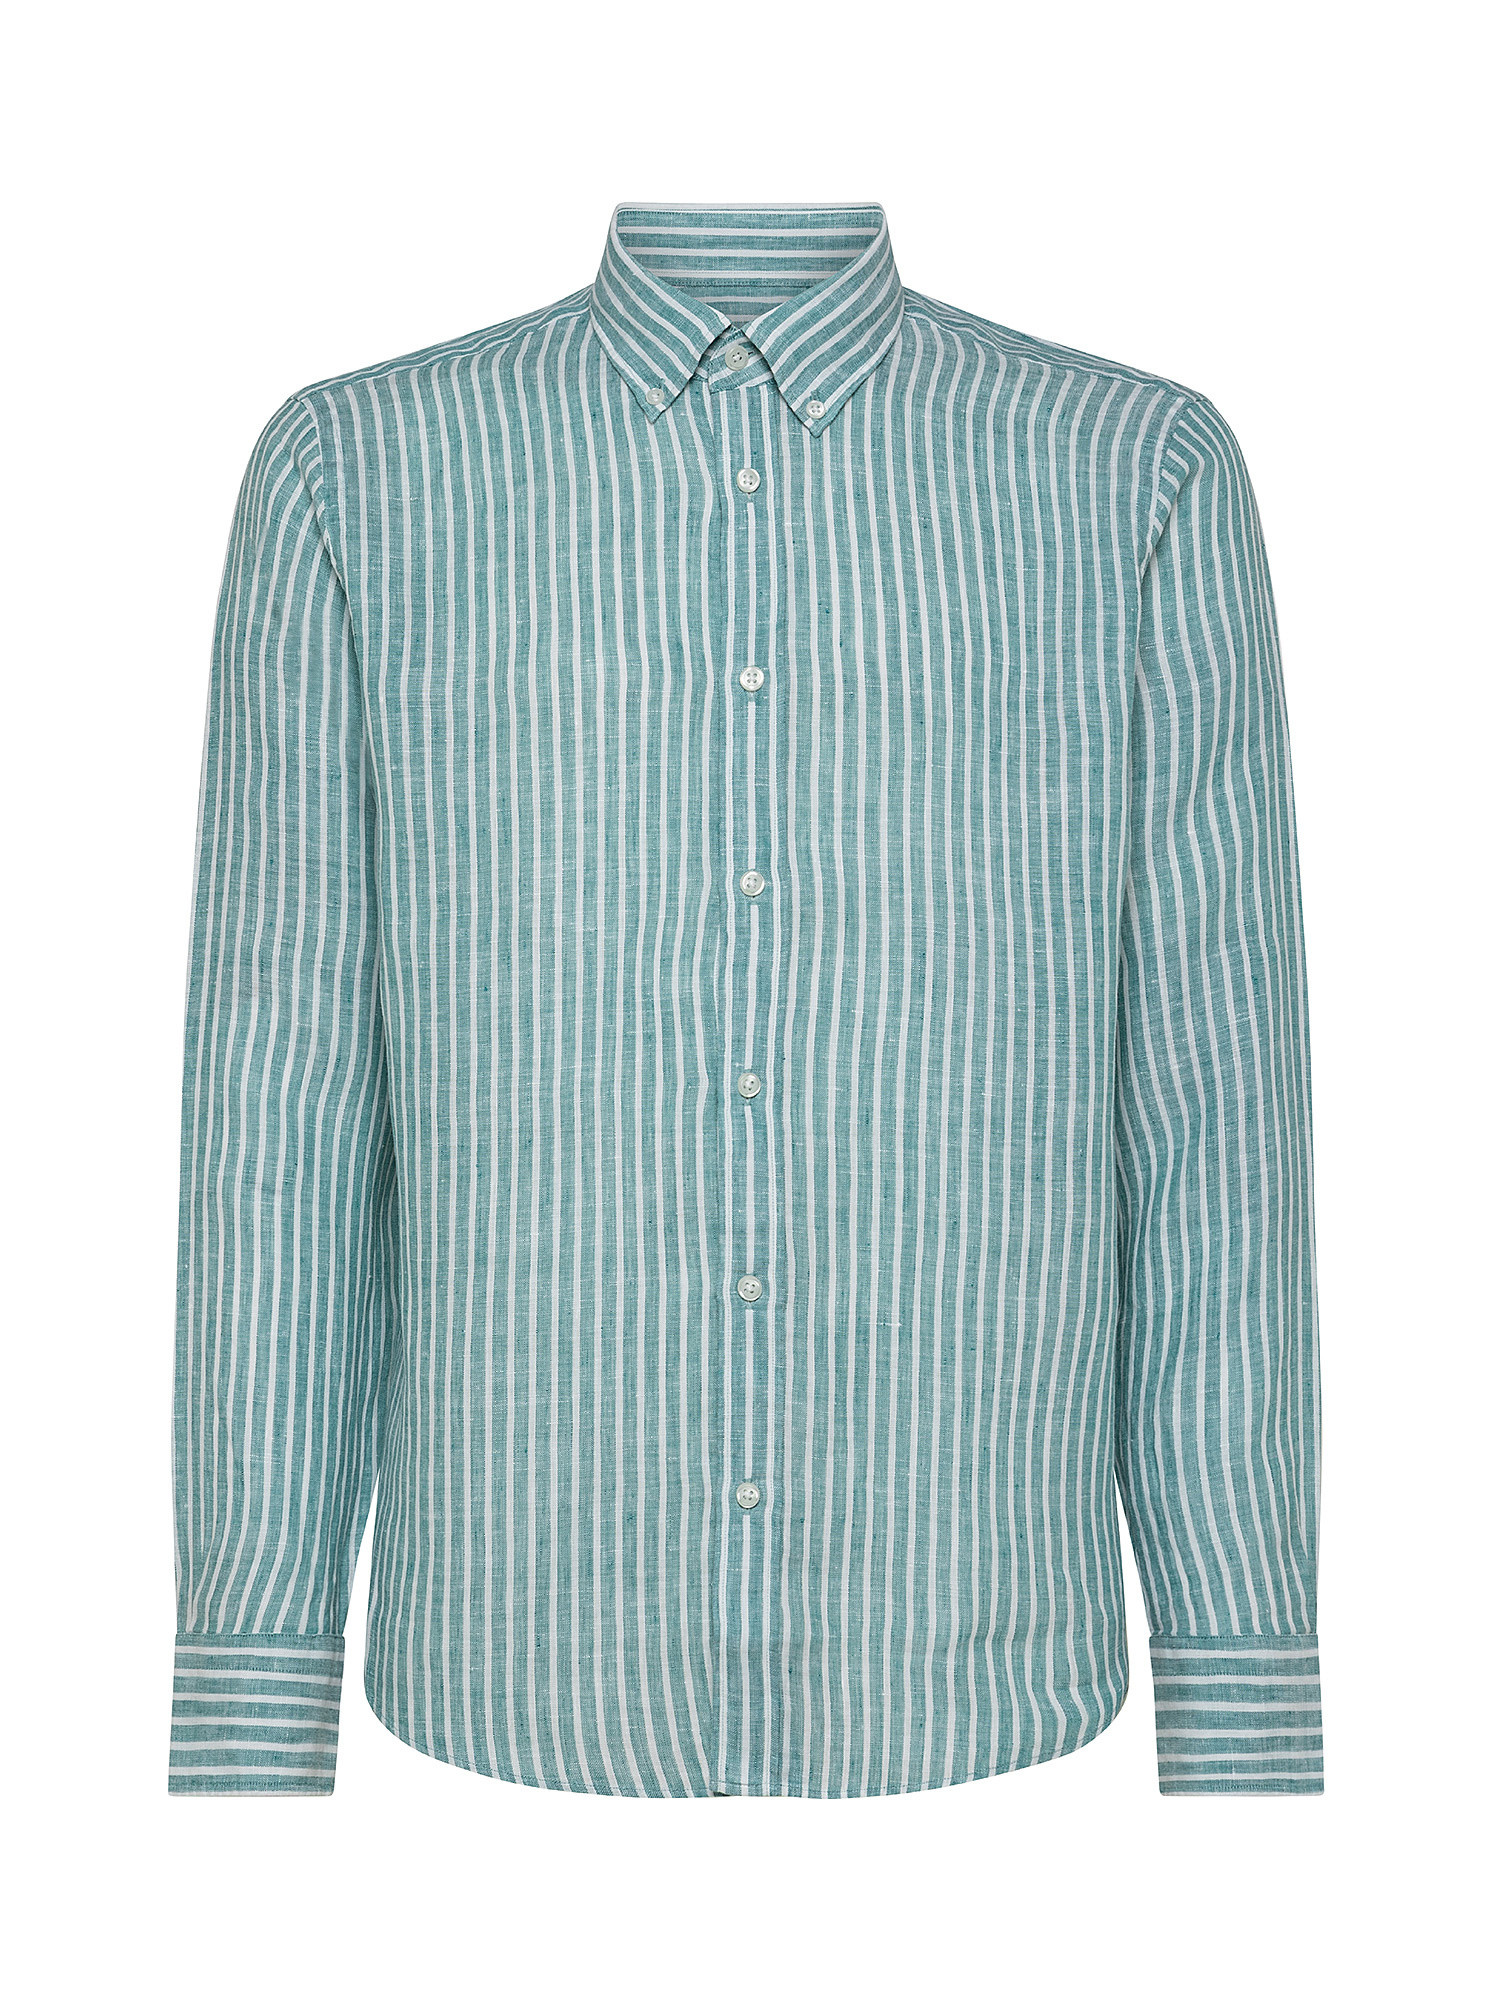 Striped linen shirt, Green, large image number 0